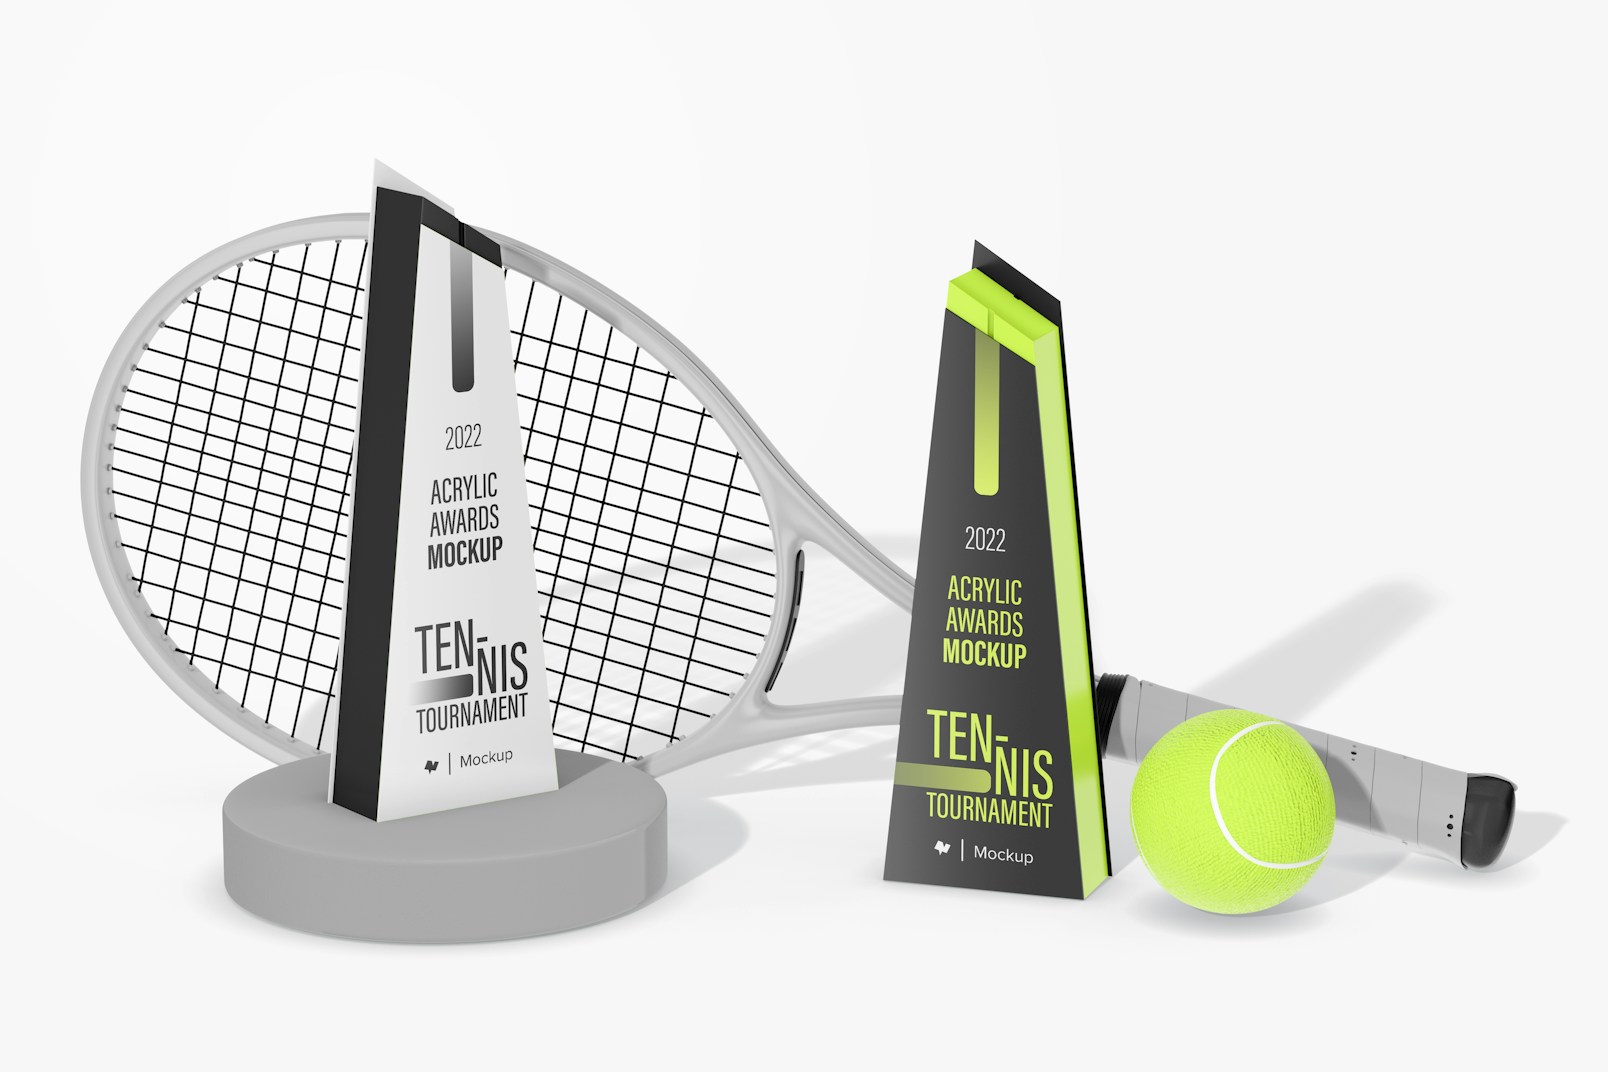 Acrylic Awards Mockup, with Racket